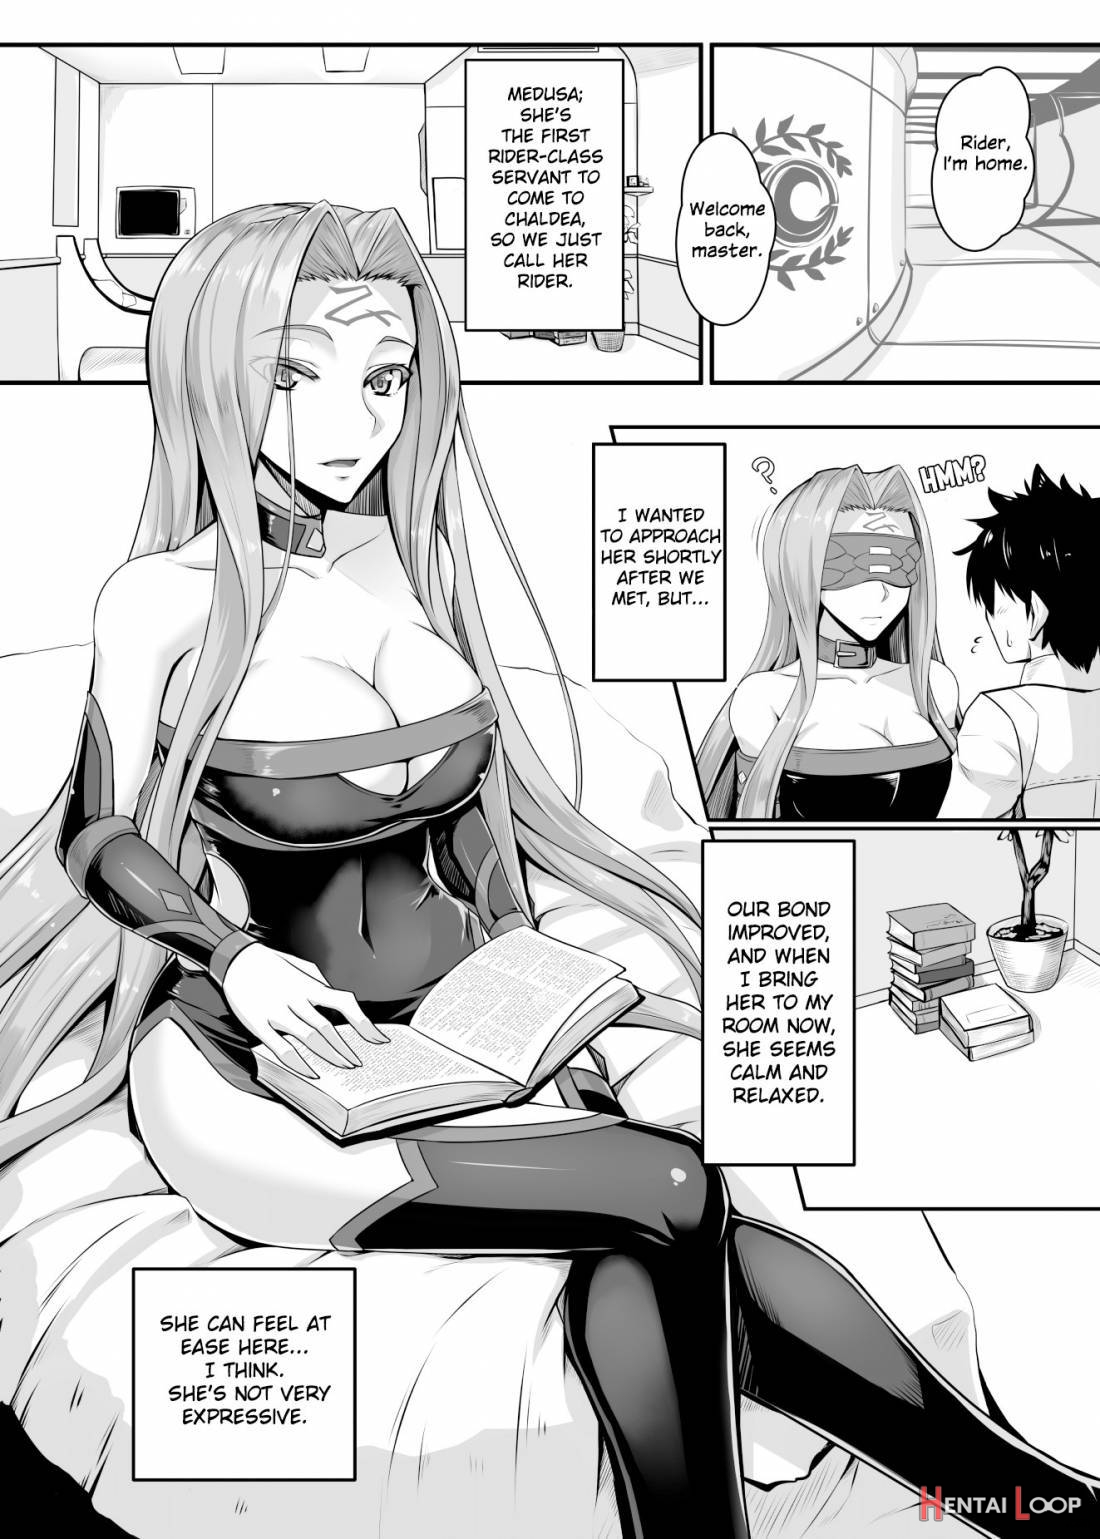 Kizuna MAX Rider-san page 2